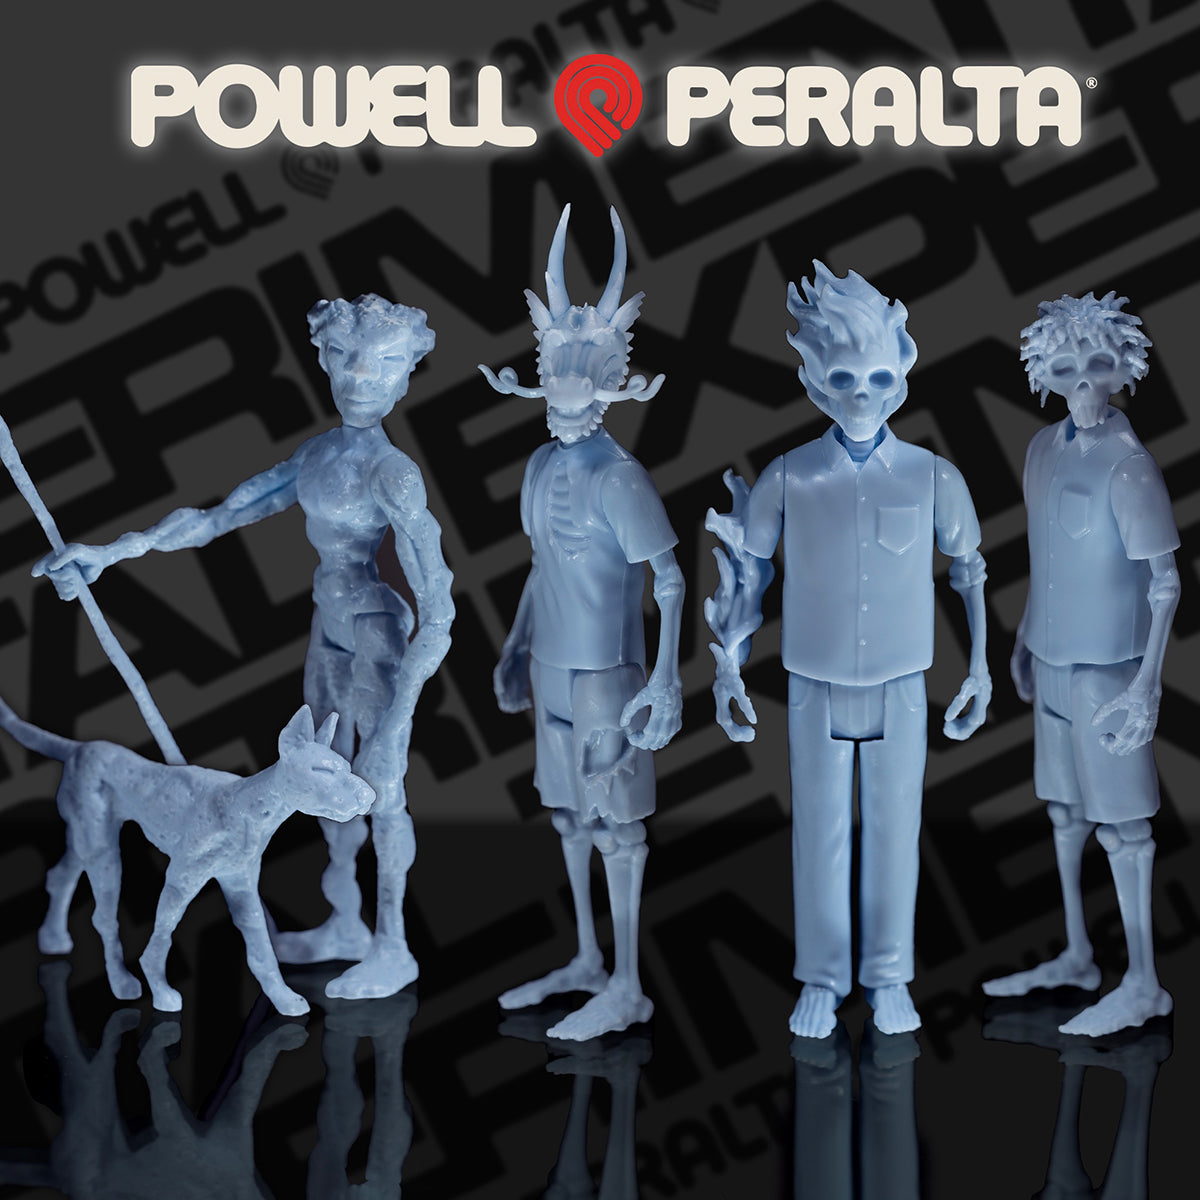 Super7 x Powell Peralta Steve Caballero Reaction Figure  Edit alt text